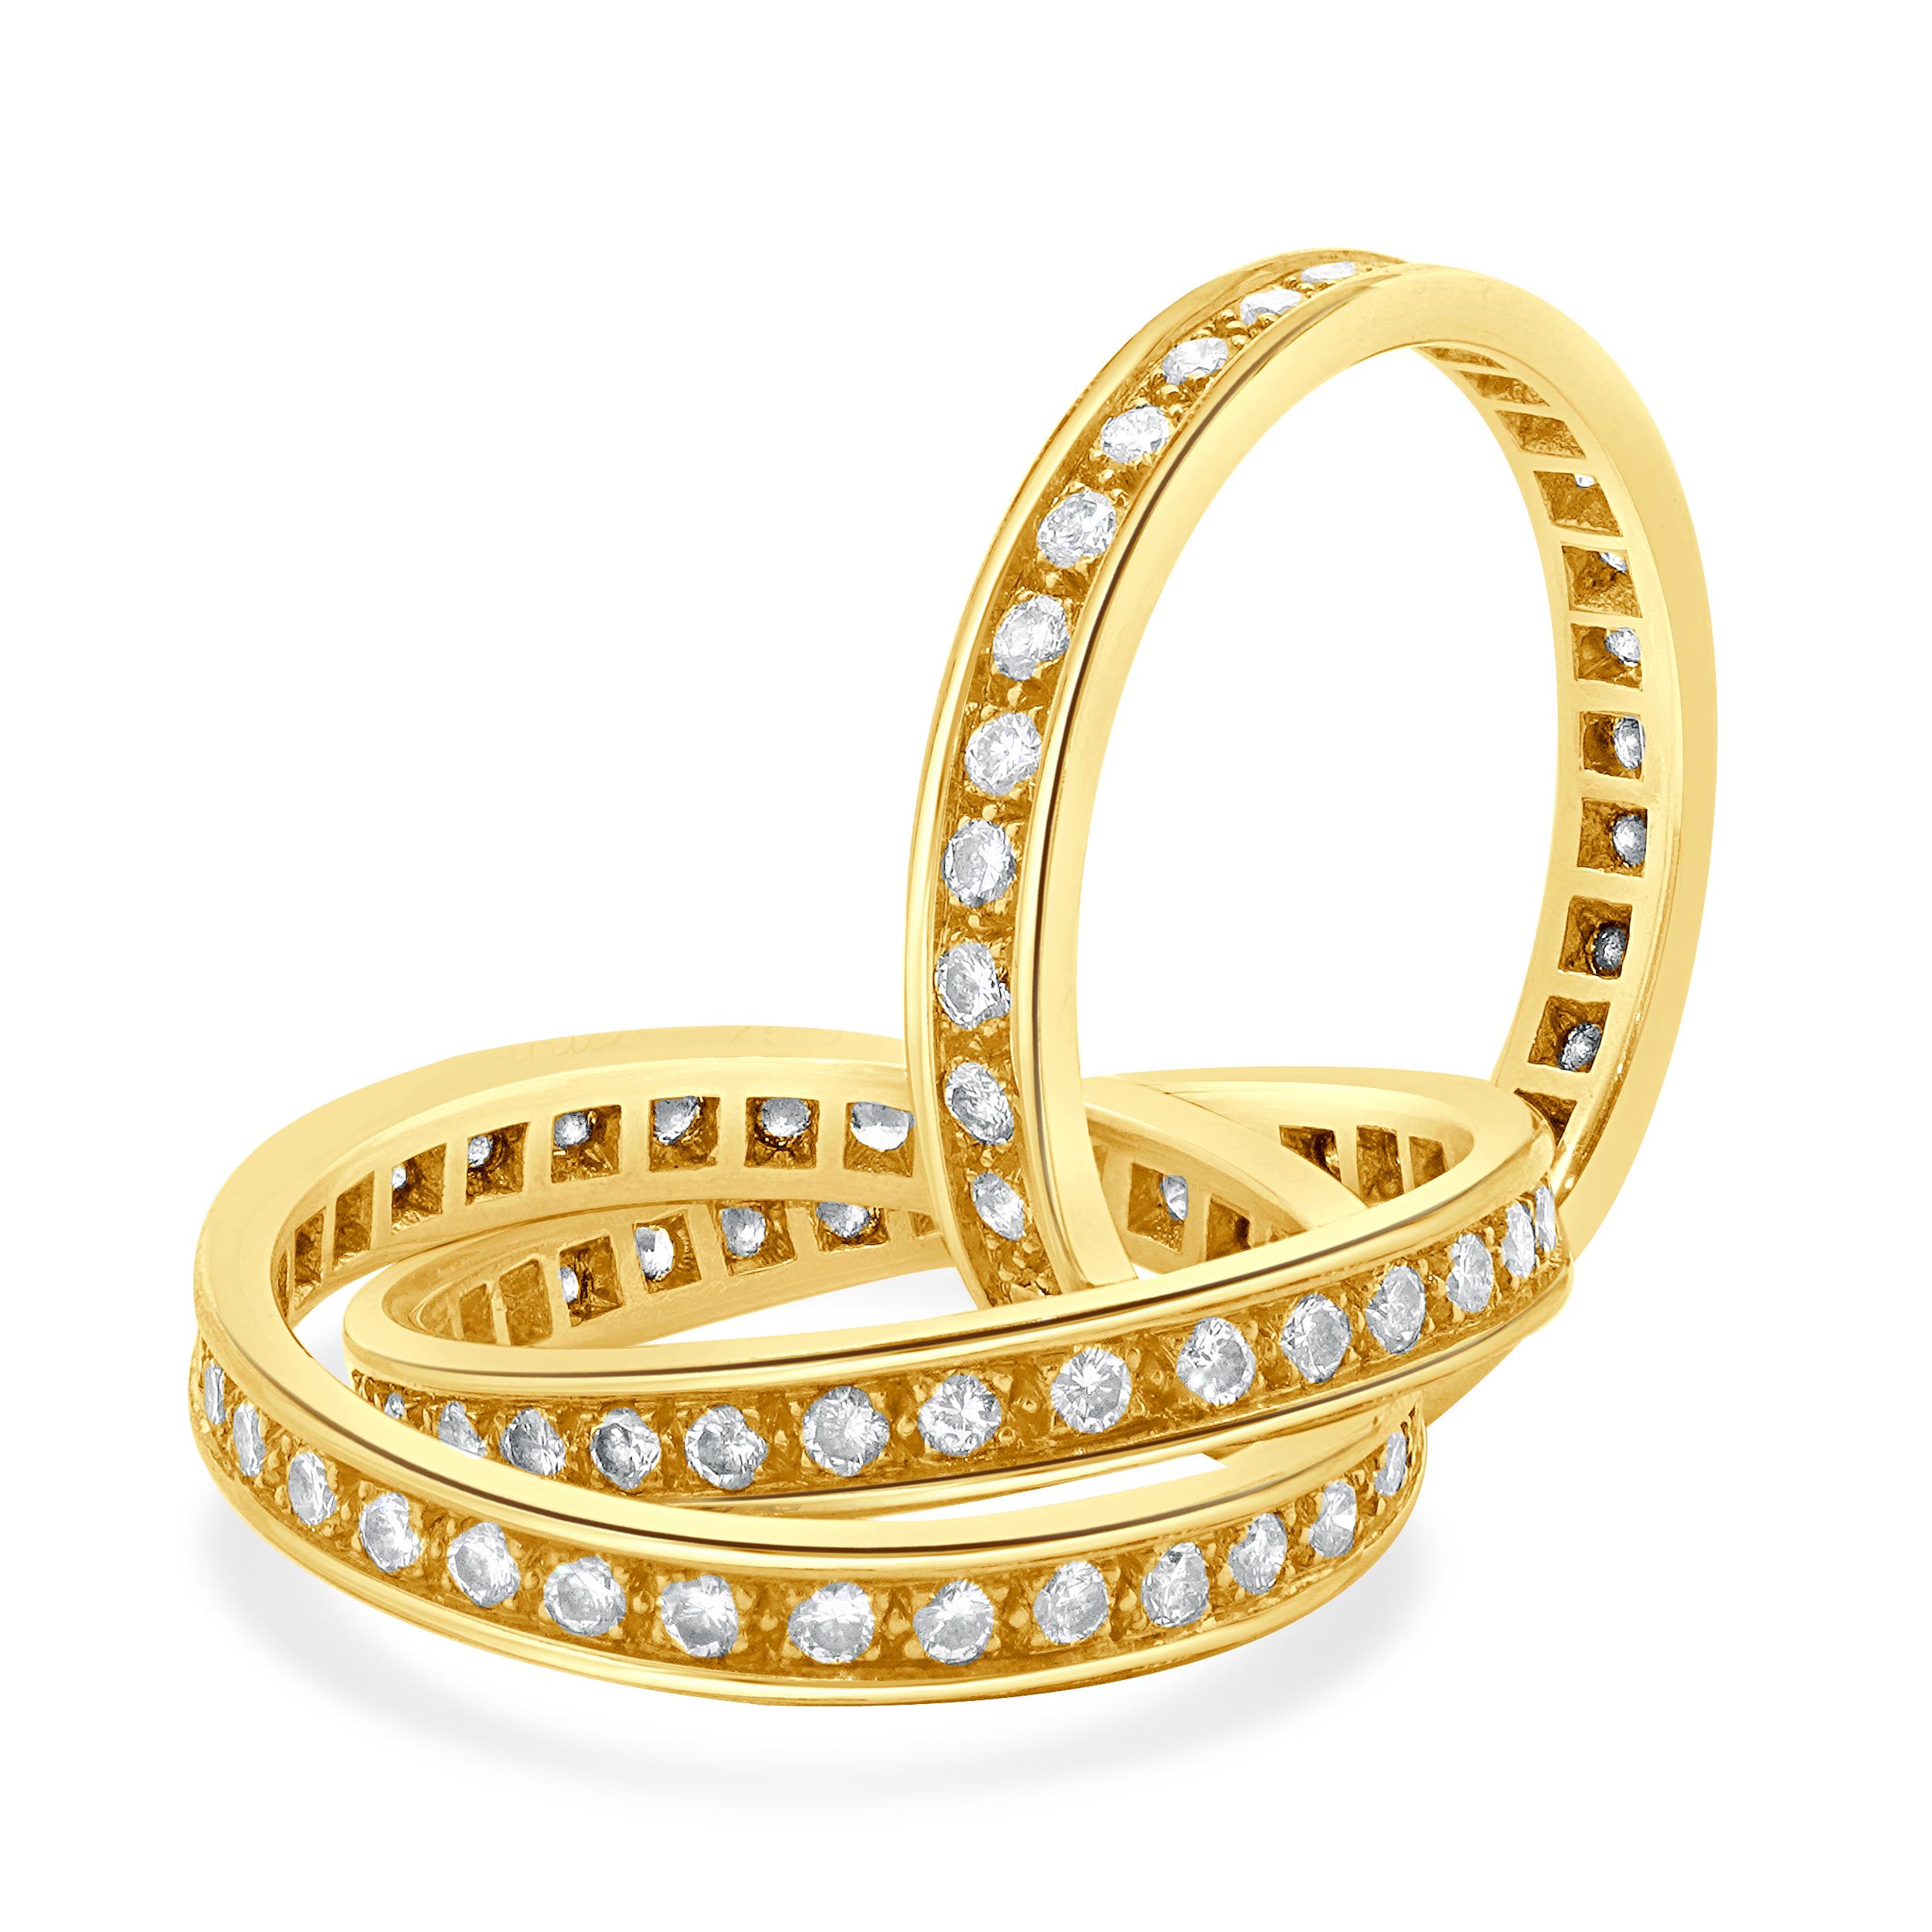 Designer: Cartier
Material: 18K yellow gold
Diamond: 96 round brilliant cut = 1.92cttw
Color: G
Clarity: VS1-2
Serial # 670XXX
